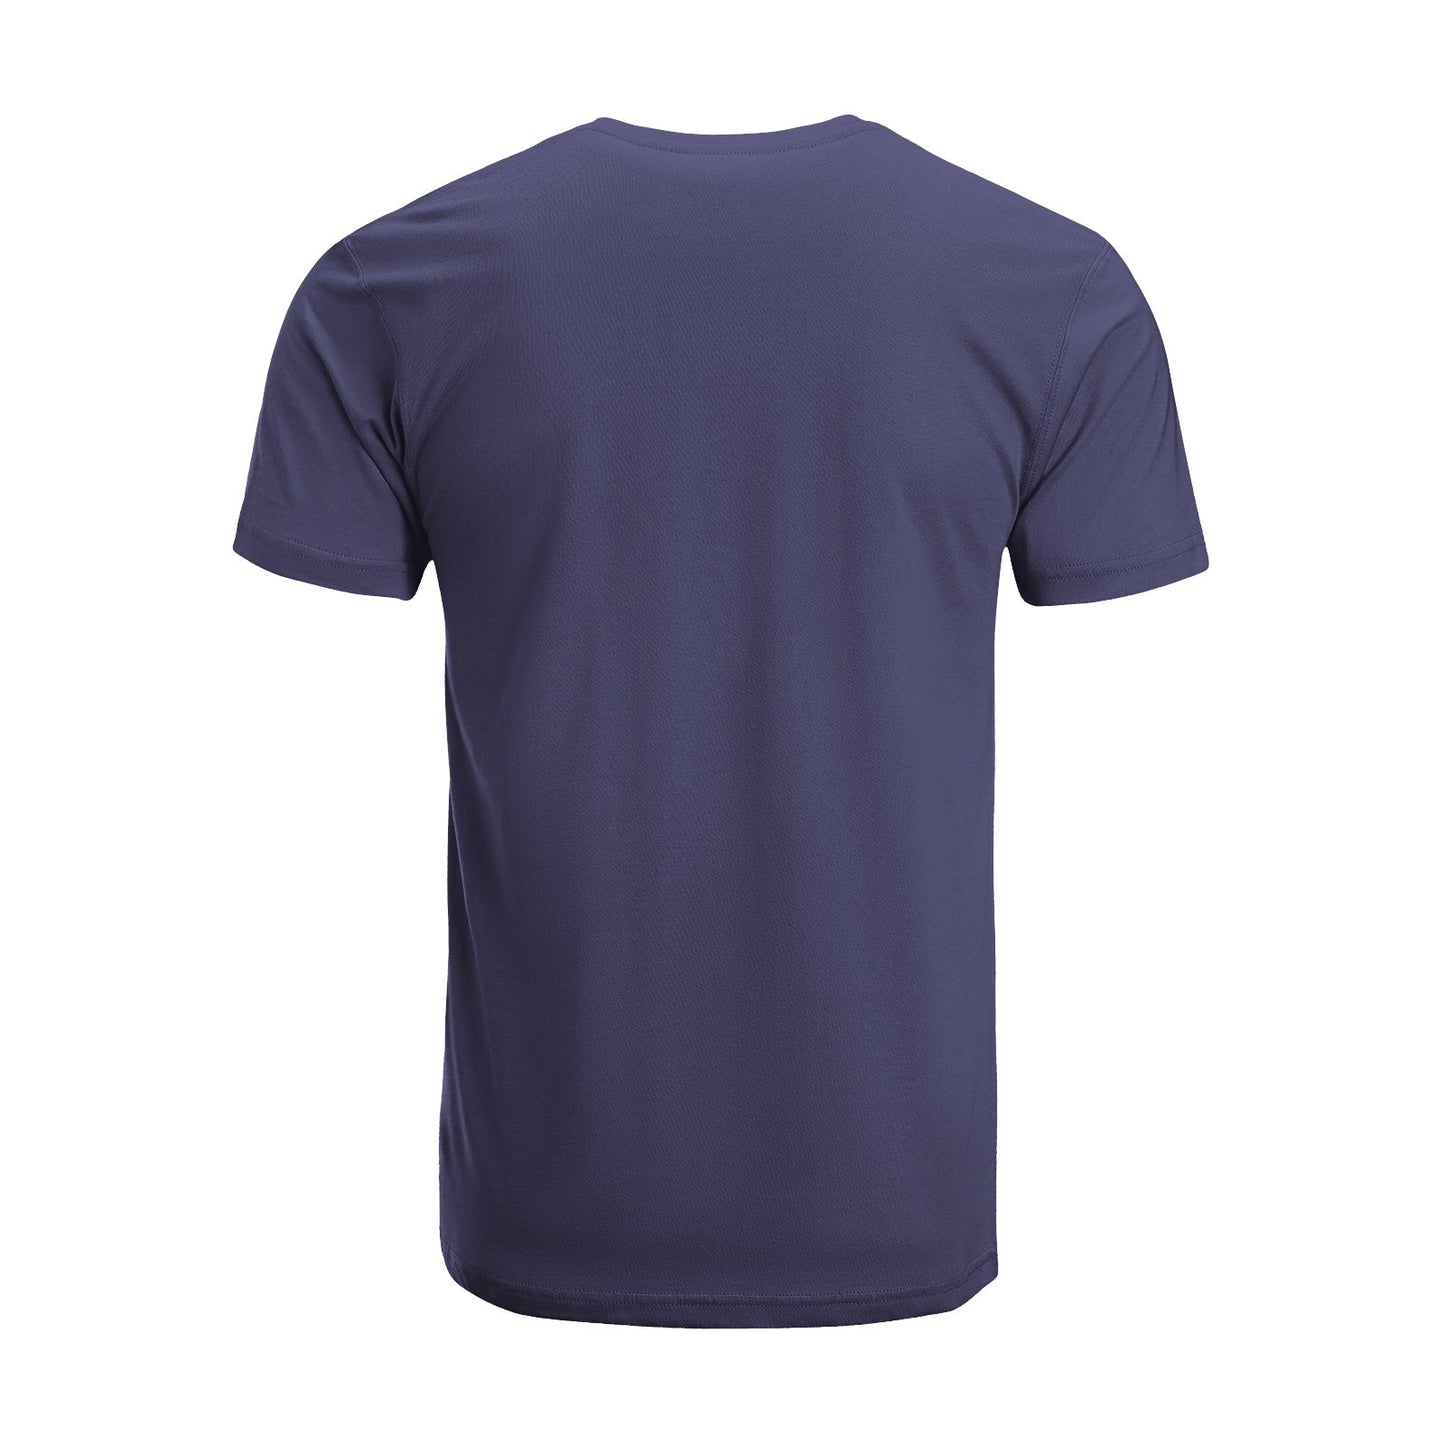 Unisex Short Sleeve Crew Neck Cotton Jersey T-Shirt MOM 22